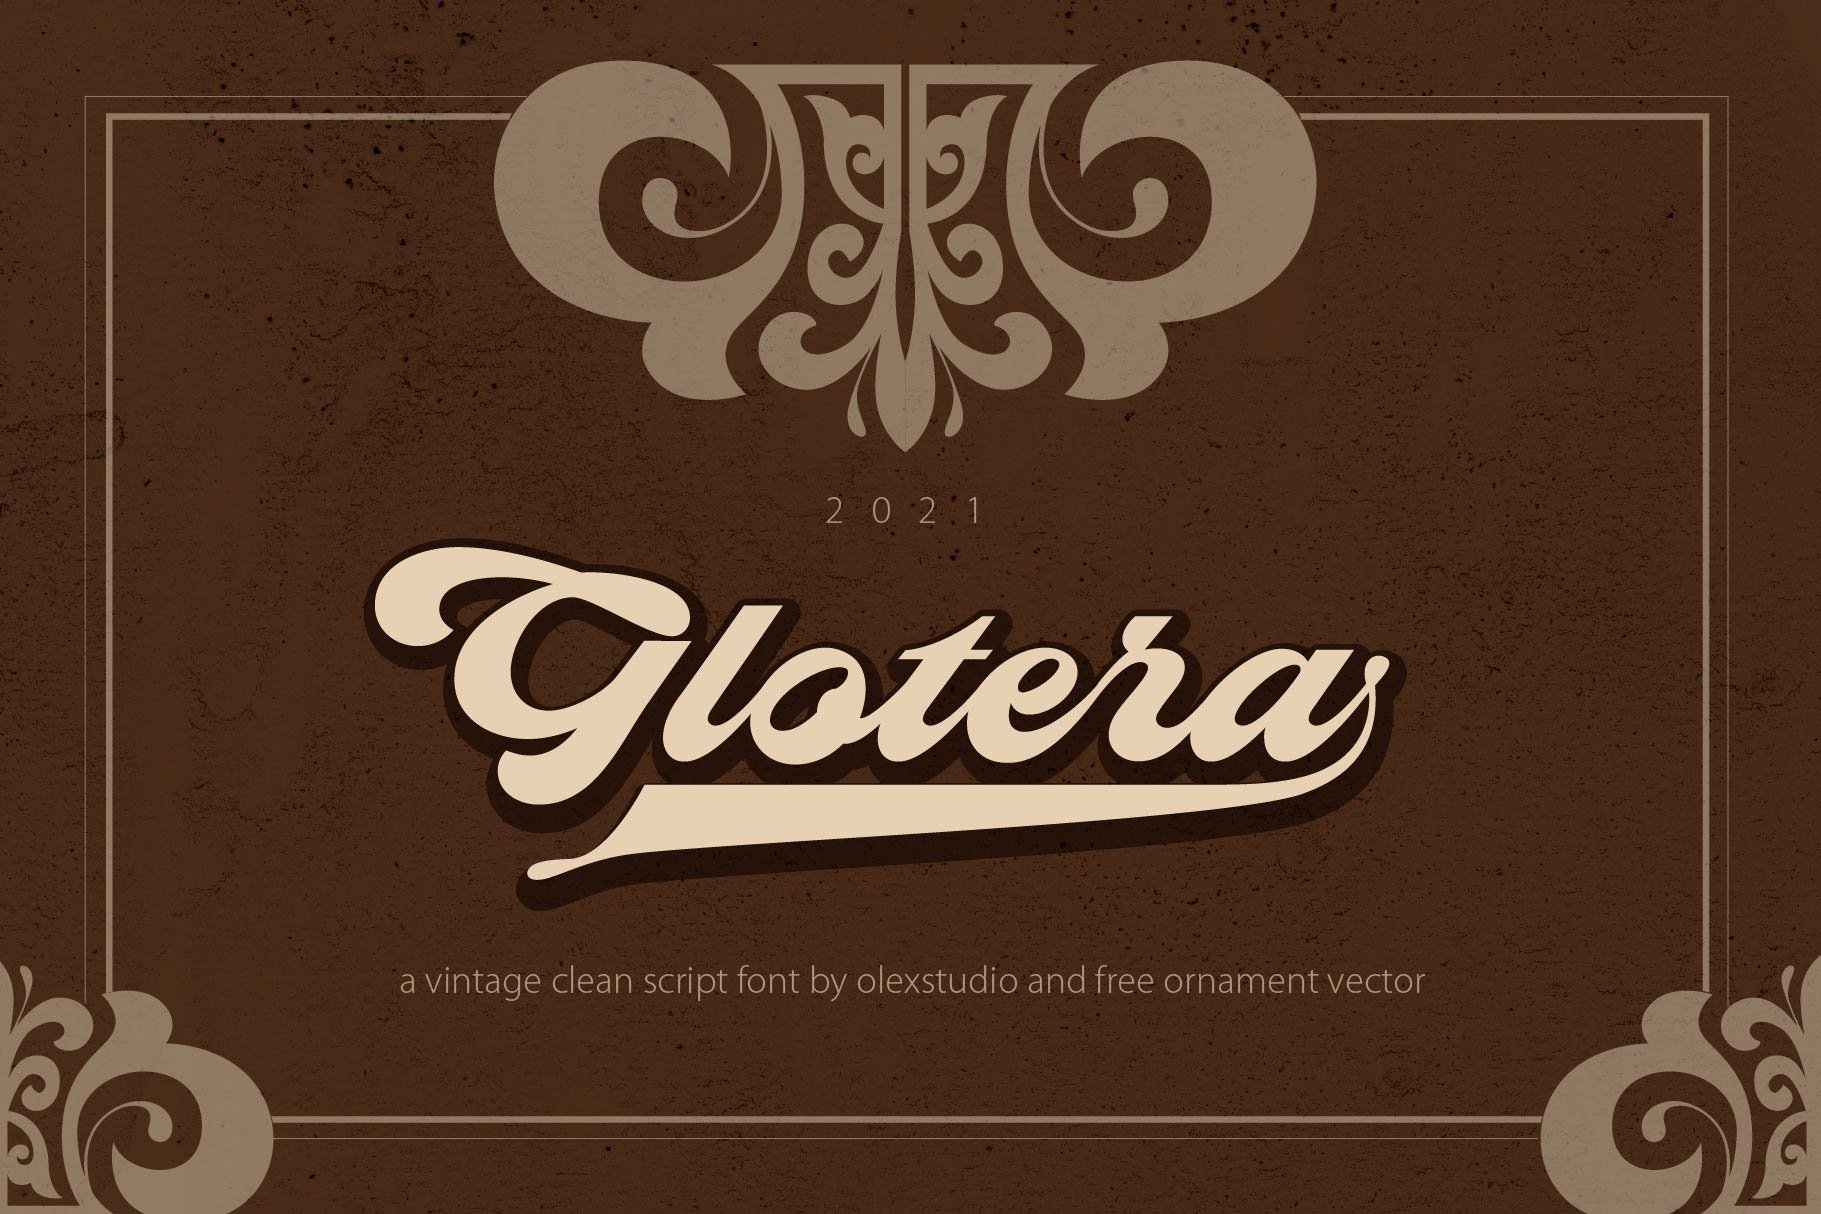 Glotera - Vintage Script cover image.